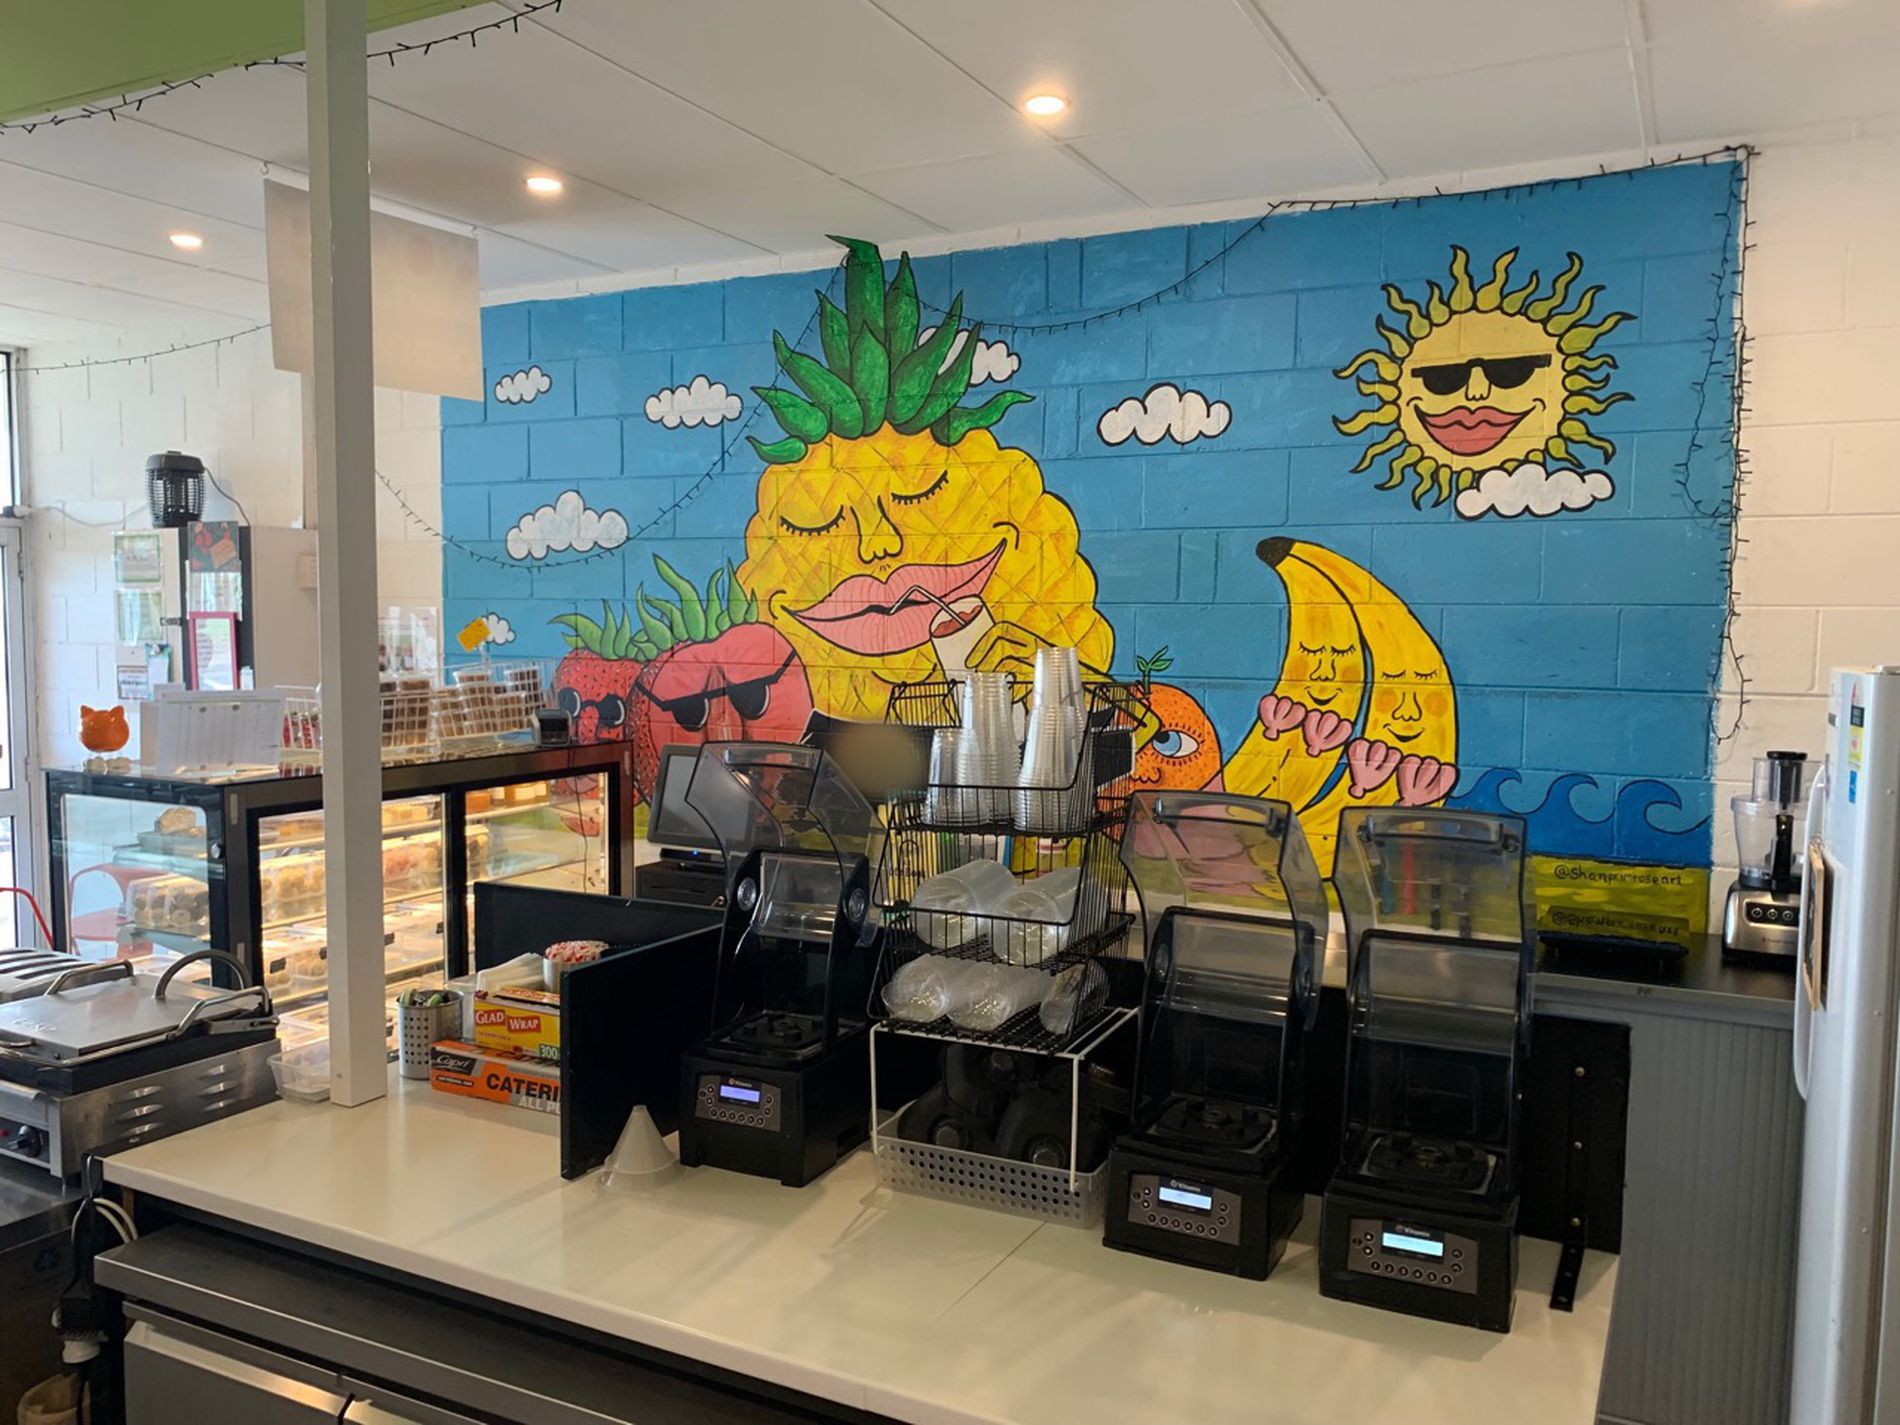 Juice Bar, Ice Creamery and Cafe Business For Sale Mornington Peninsula
